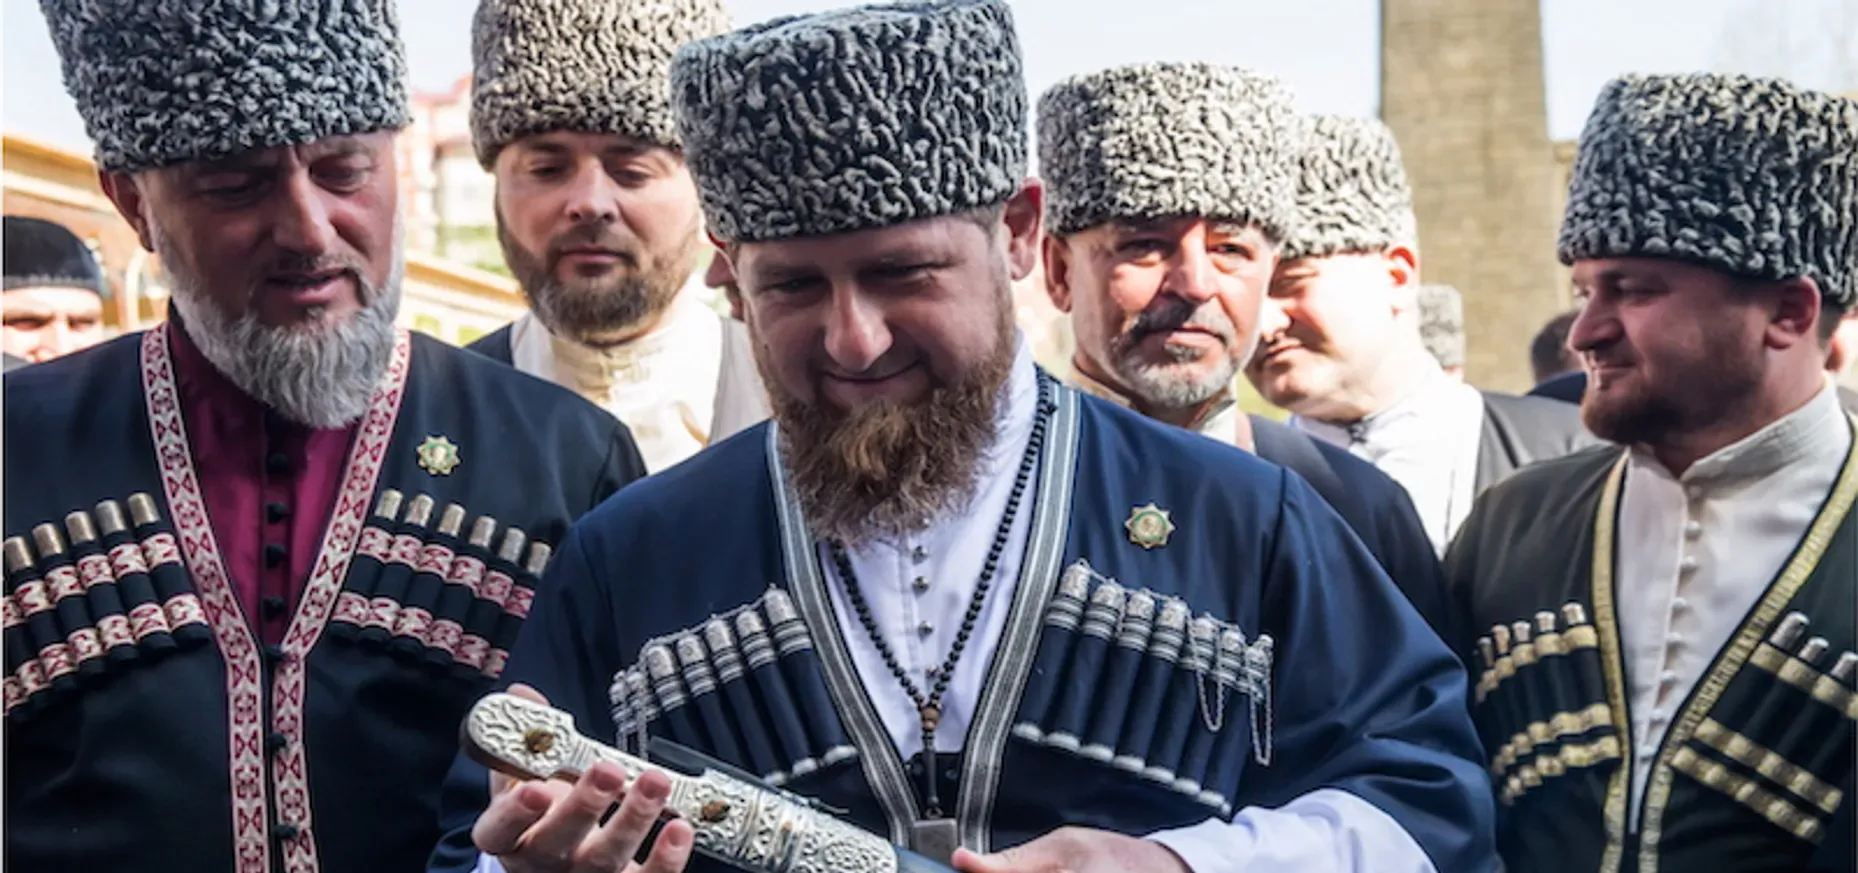 Fifteen-year-old Adam Kadyrov, the son of Chechen leader Ramzan